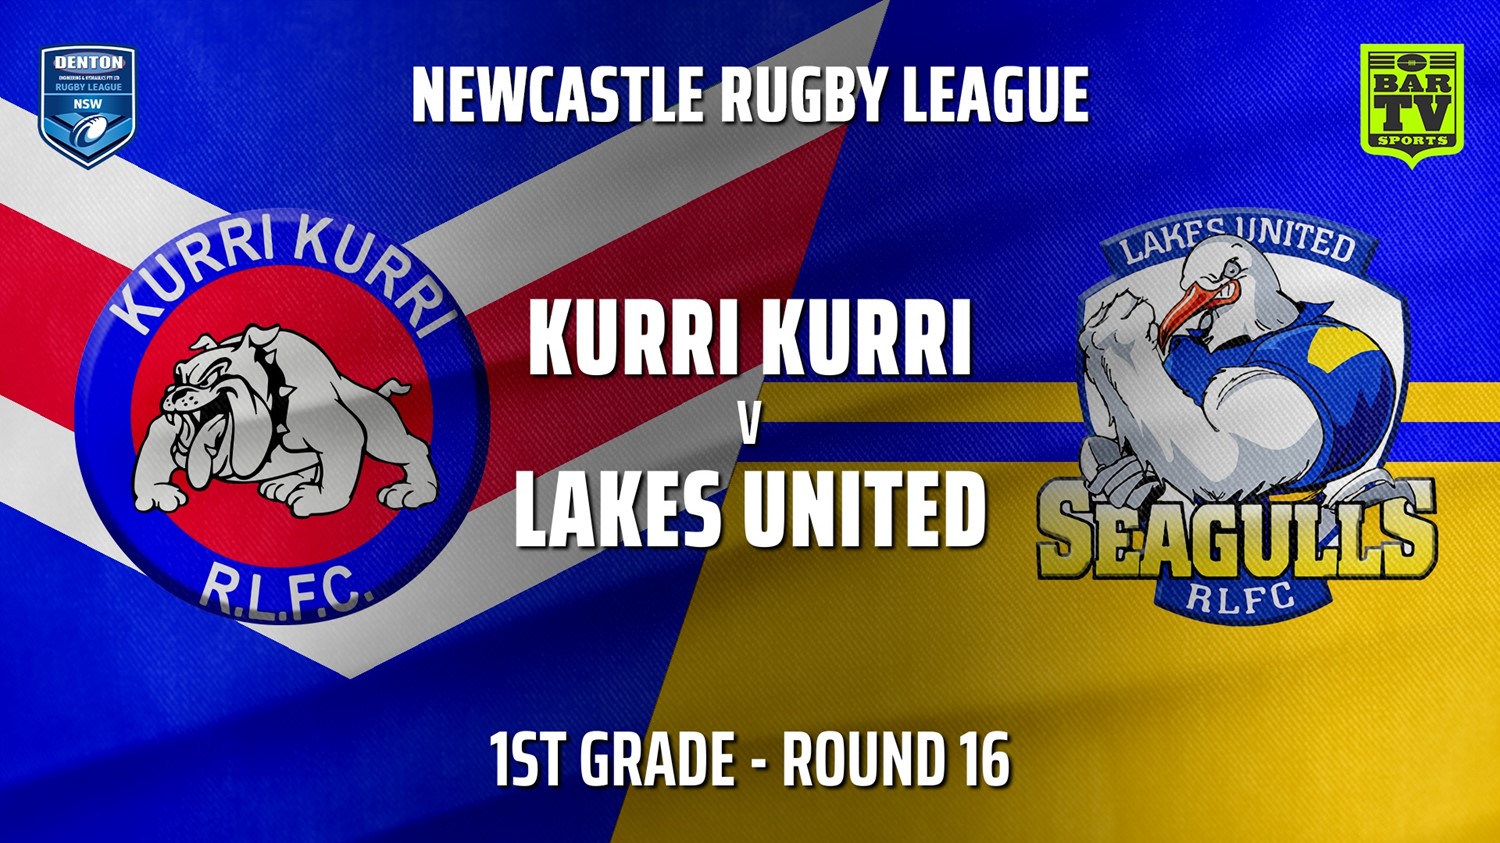 210724-Newcastle Round 16 - 1st Grade - Kurri Kurri Bulldogs v Lakes United Slate Image